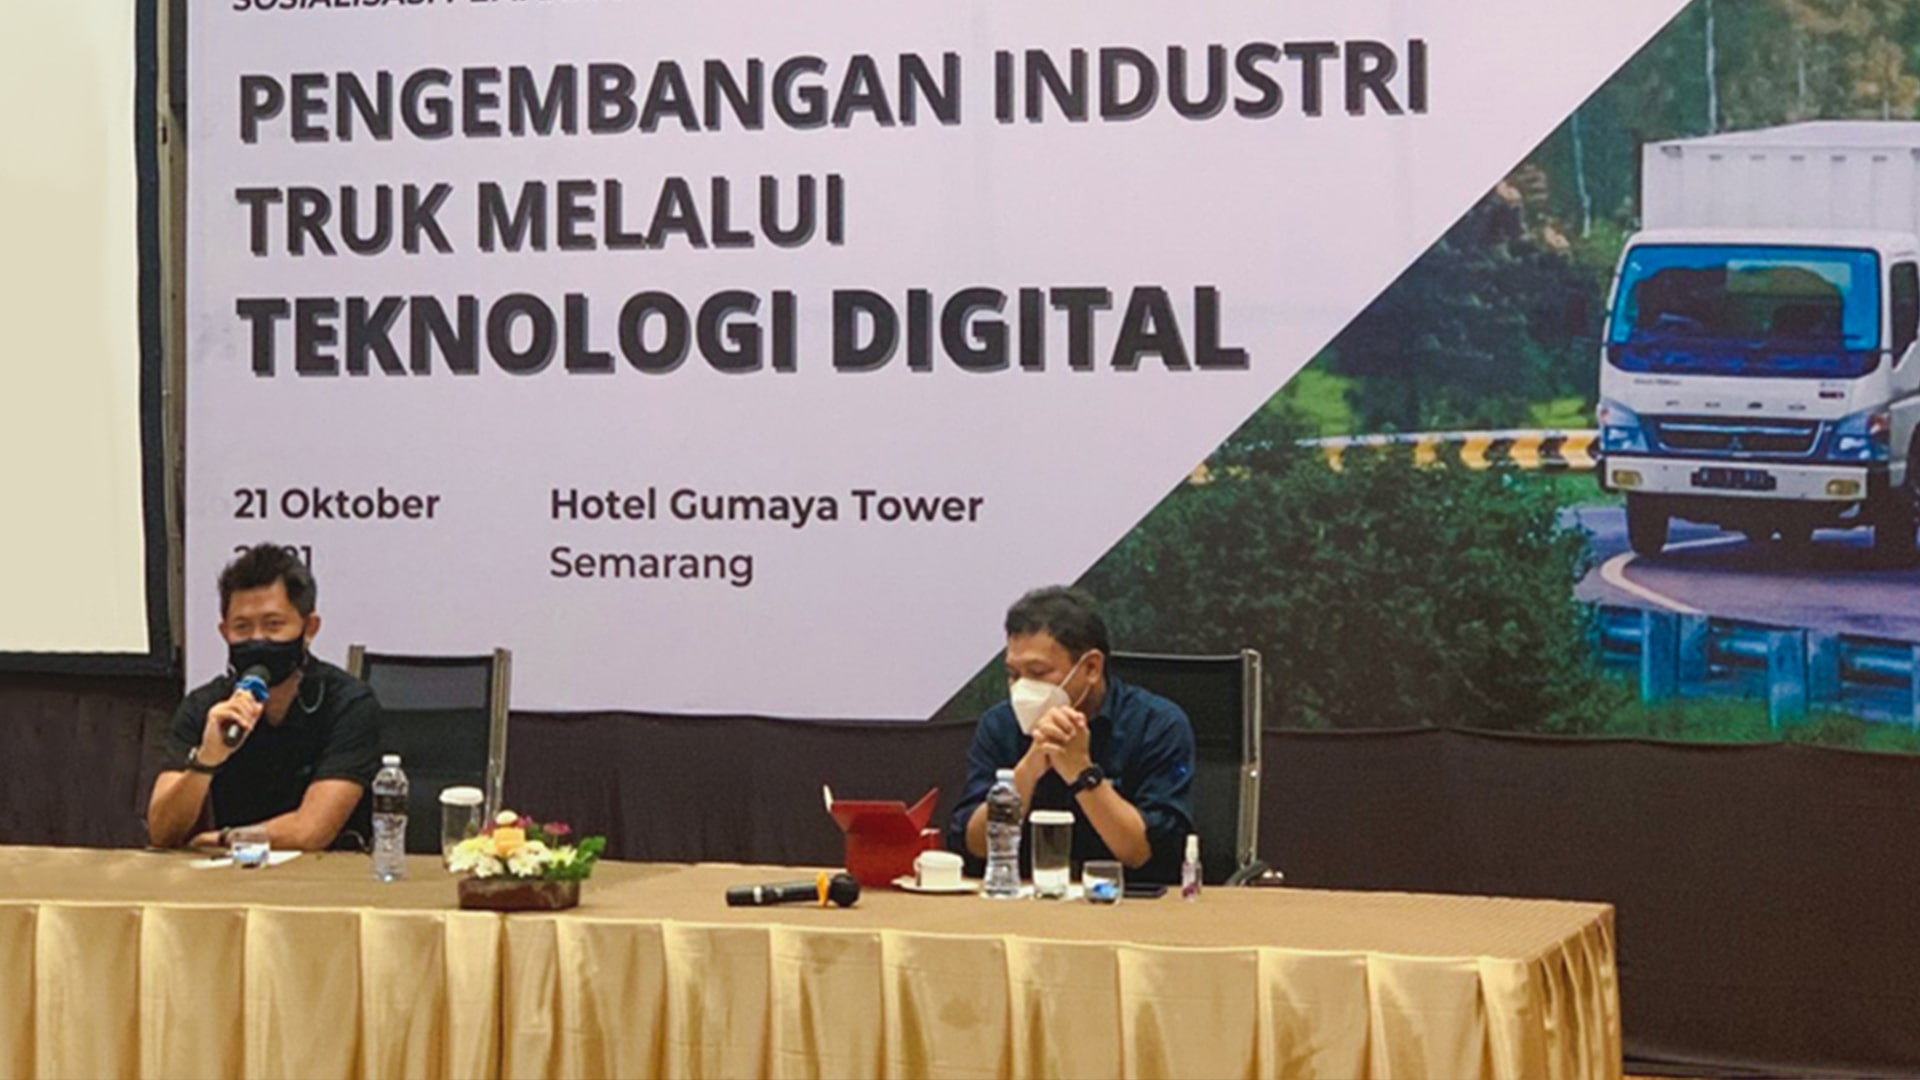 Socialization of Truck Industry Development Through Digital Technology in Semarang